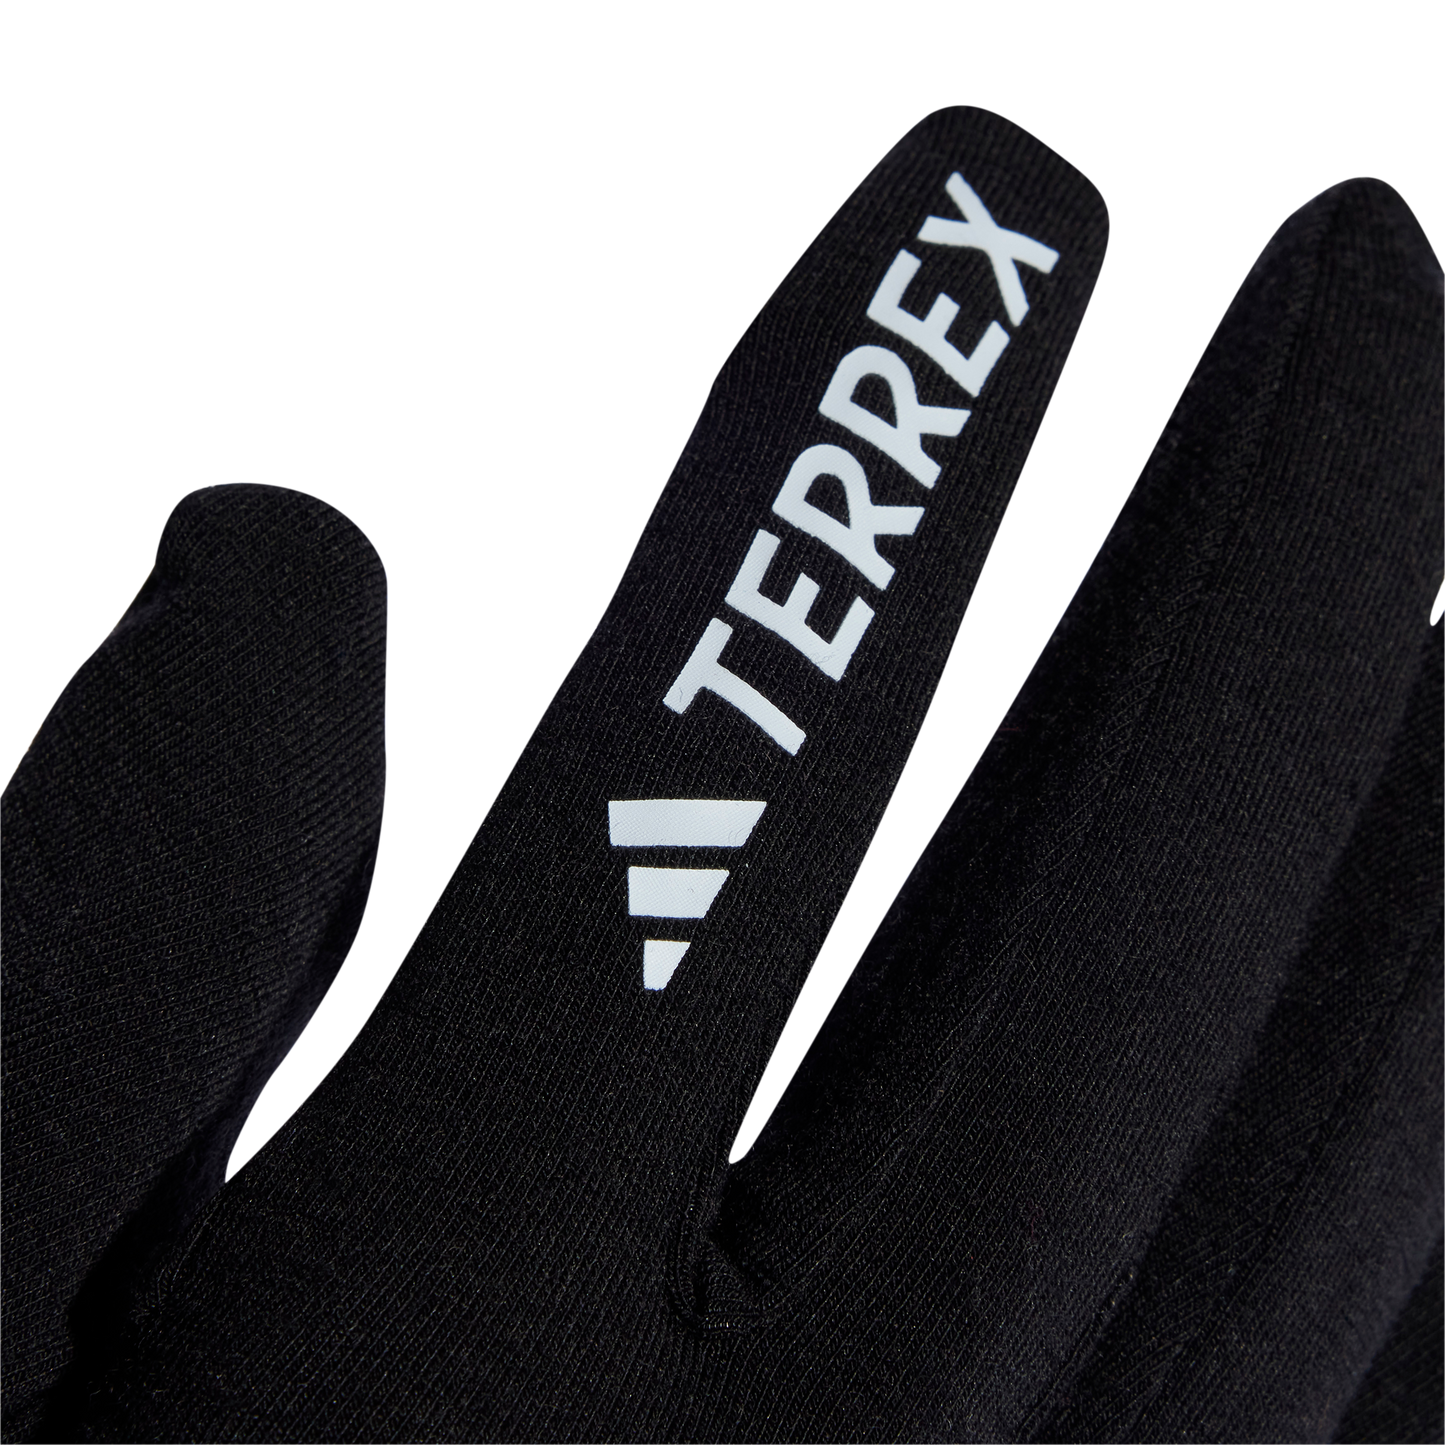 Terrex Merino Wool Gloves - Unisex